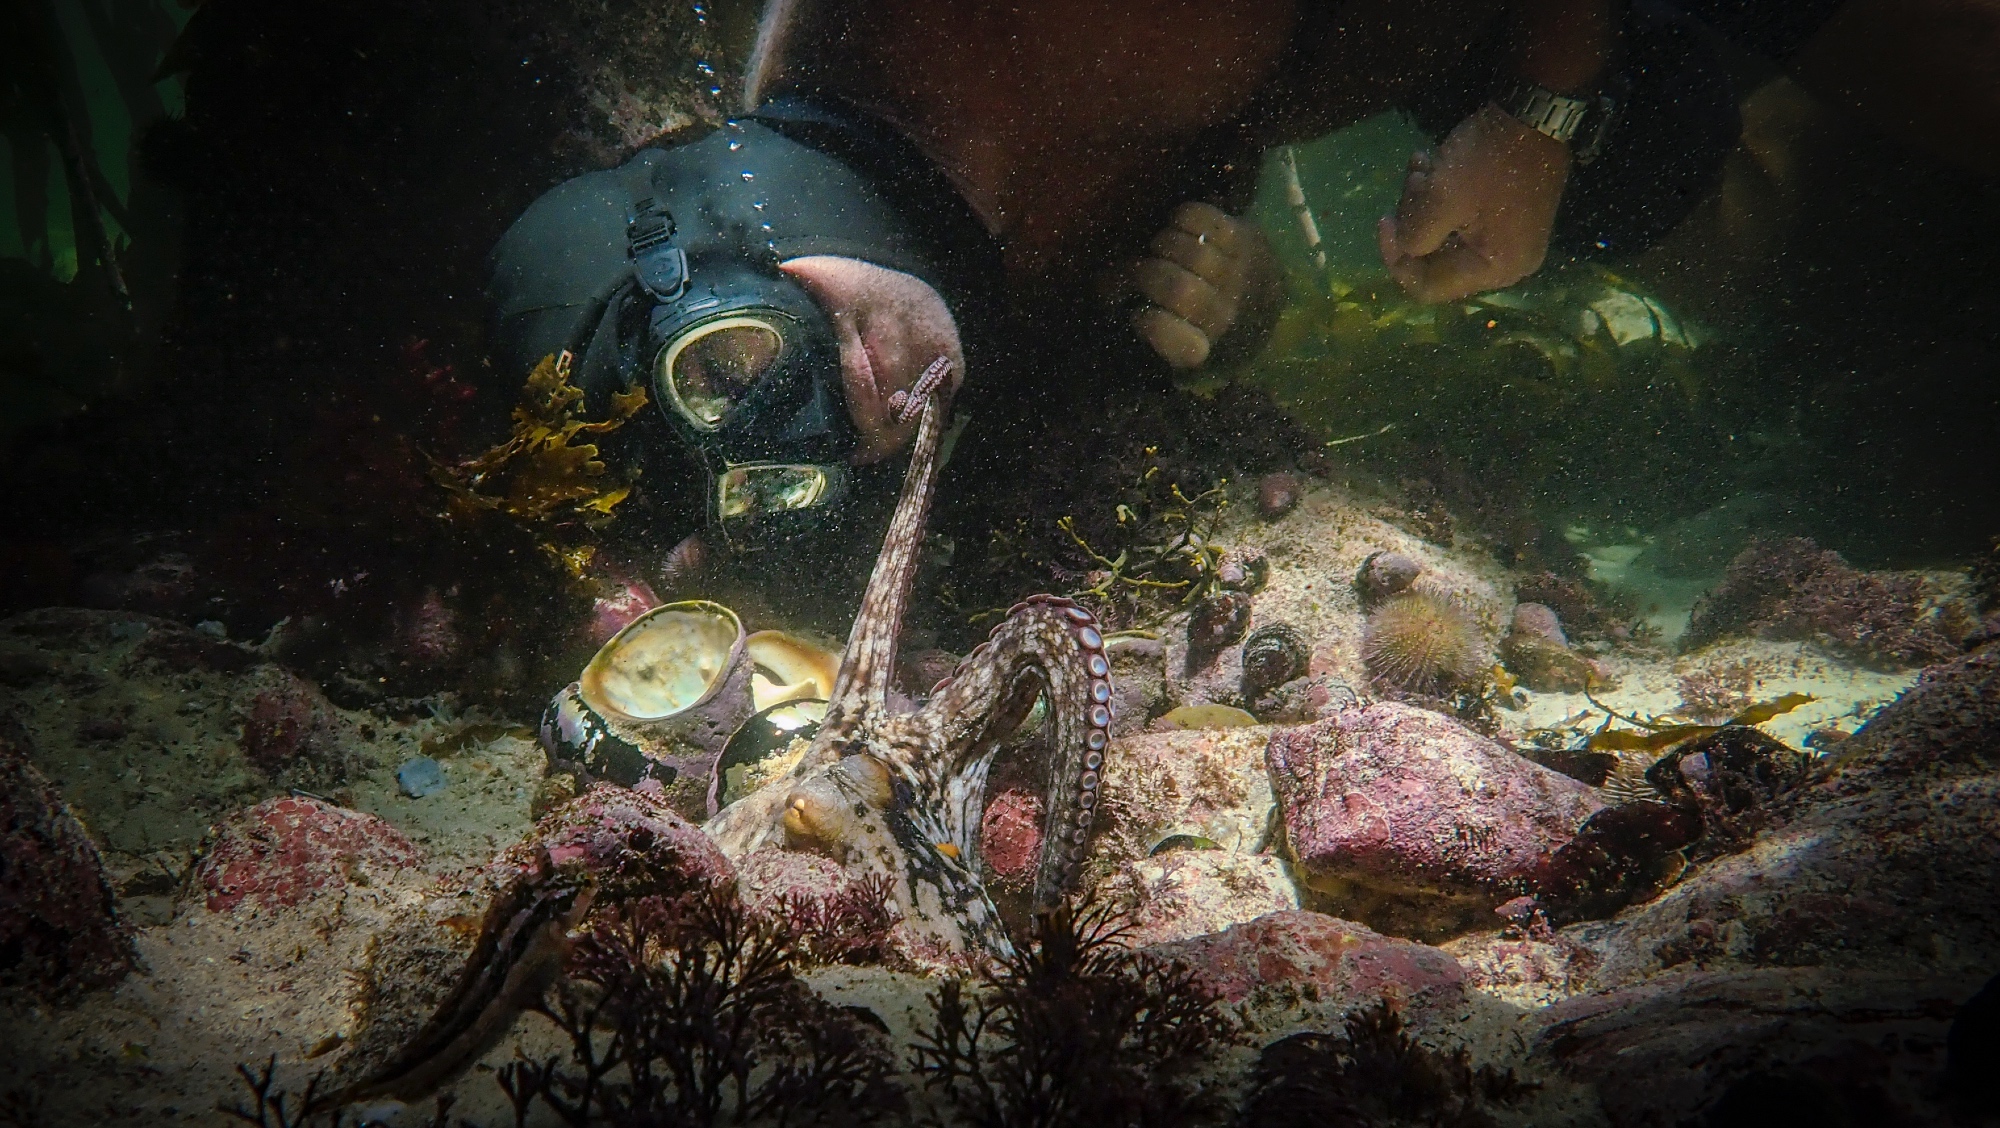 'My Octopus Teacher' reaches out to Craig Tom Foster underwater